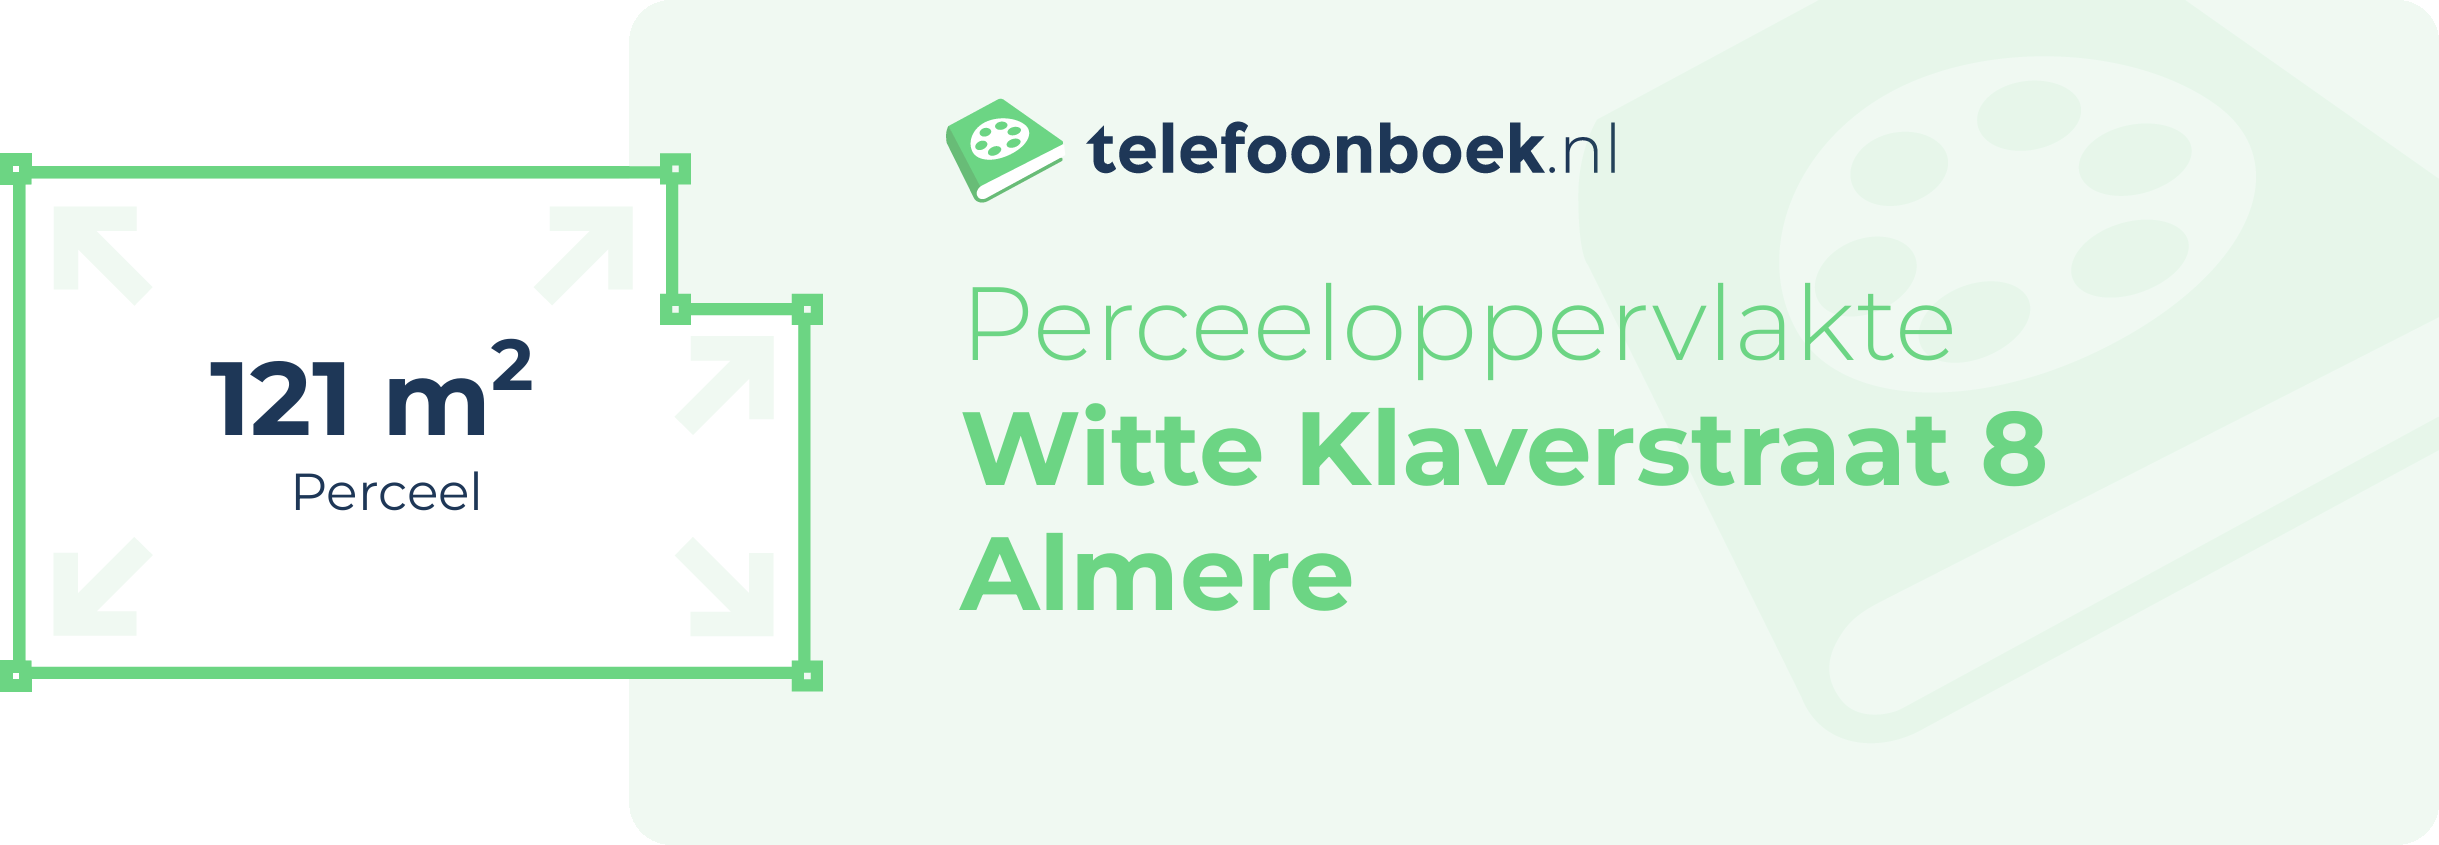 Perceeloppervlakte Witte Klaverstraat 8 Almere